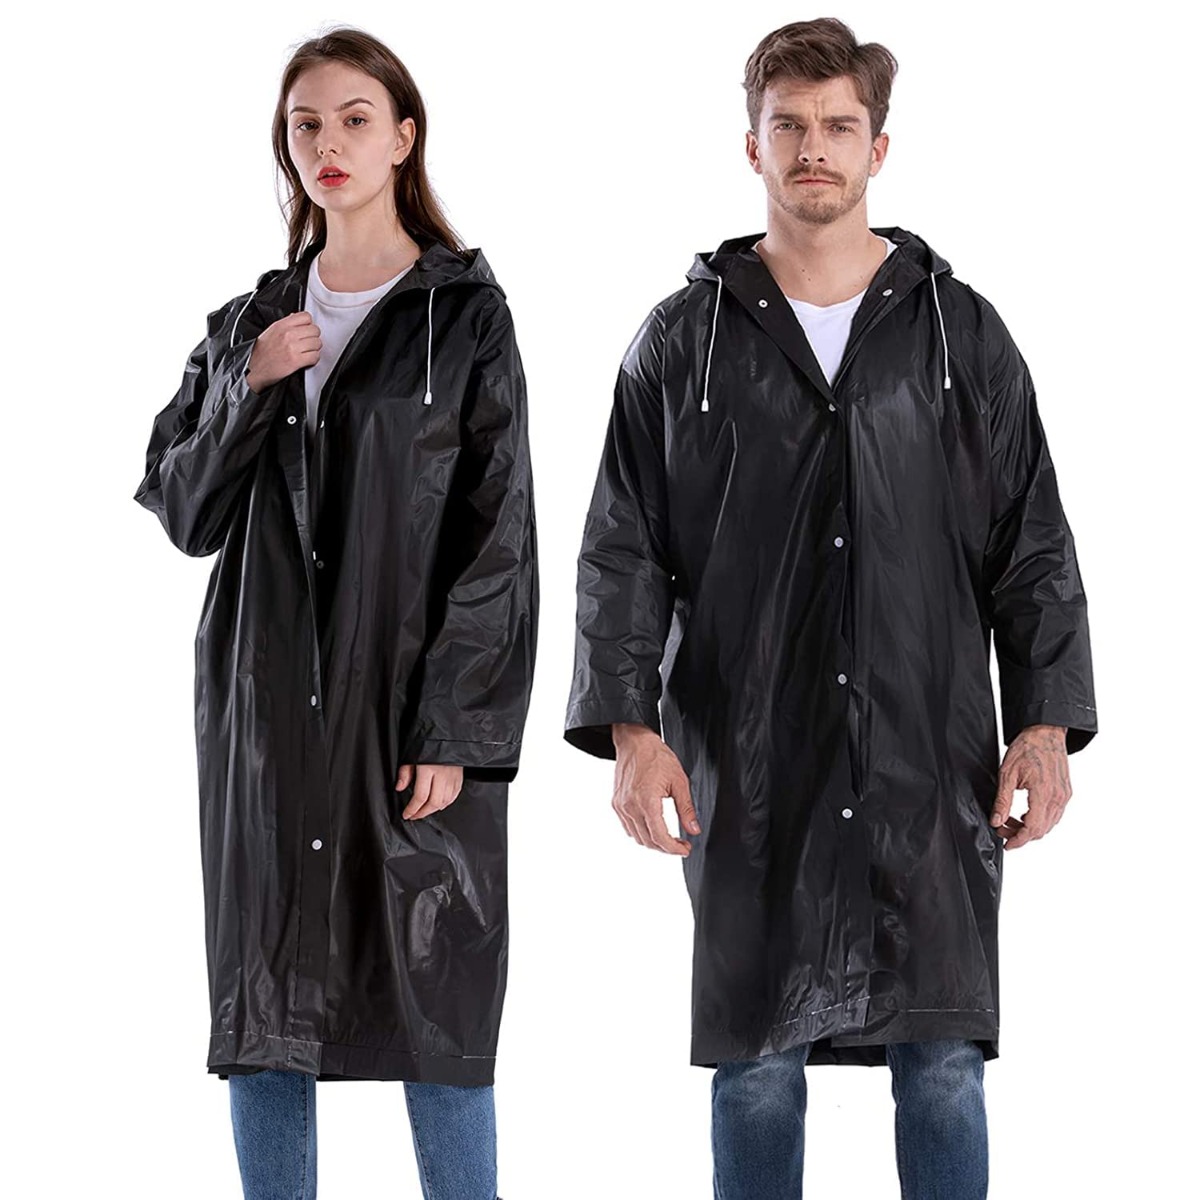 Buy GOLD raincoat for men Black Men Waterproof Raincoat with Pants  Polyester Reversible Double Layer Rain Coat For Men Bike Rain Suit Rain  Jacket Suit Inner Mobile Pocket with Storage Bag Online